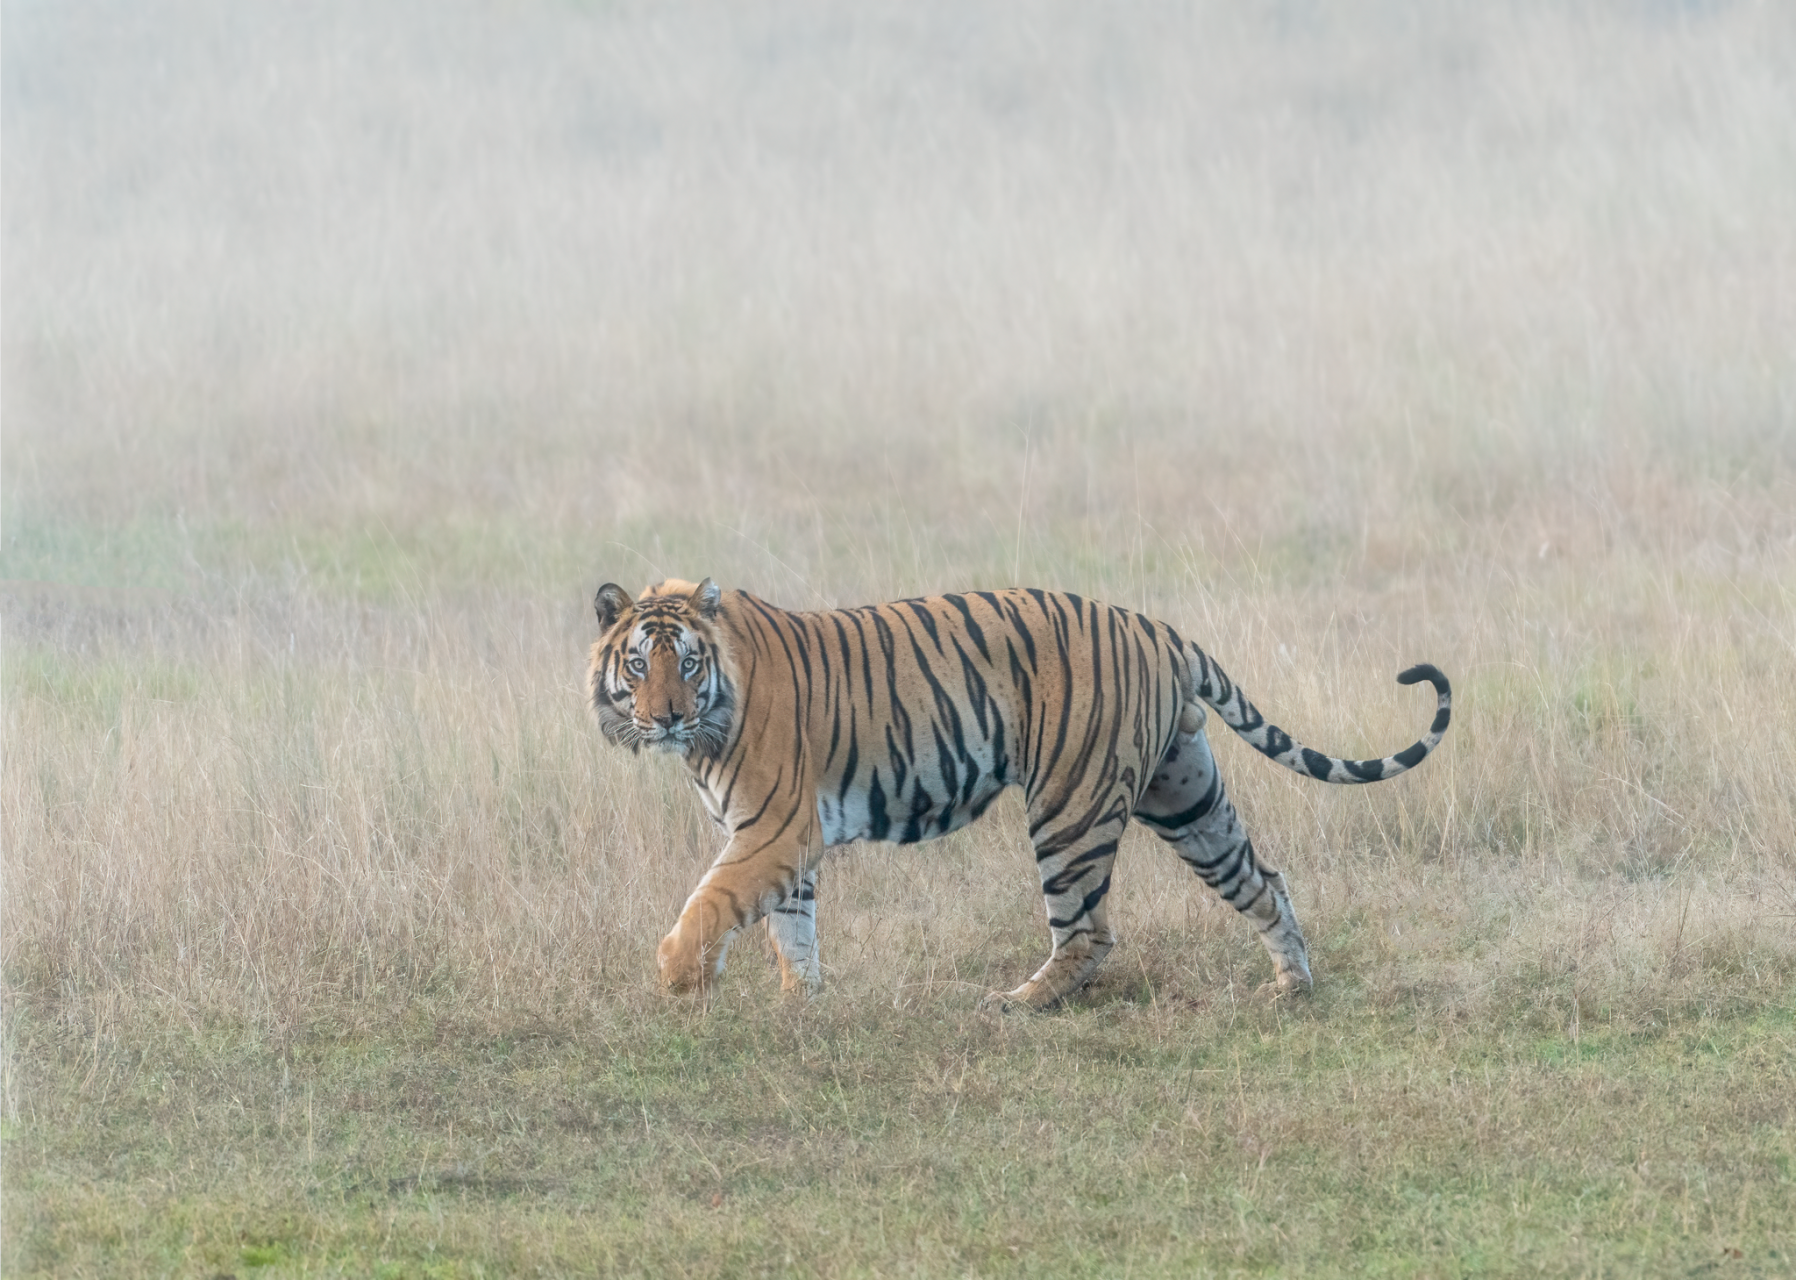 Tiger in Mist